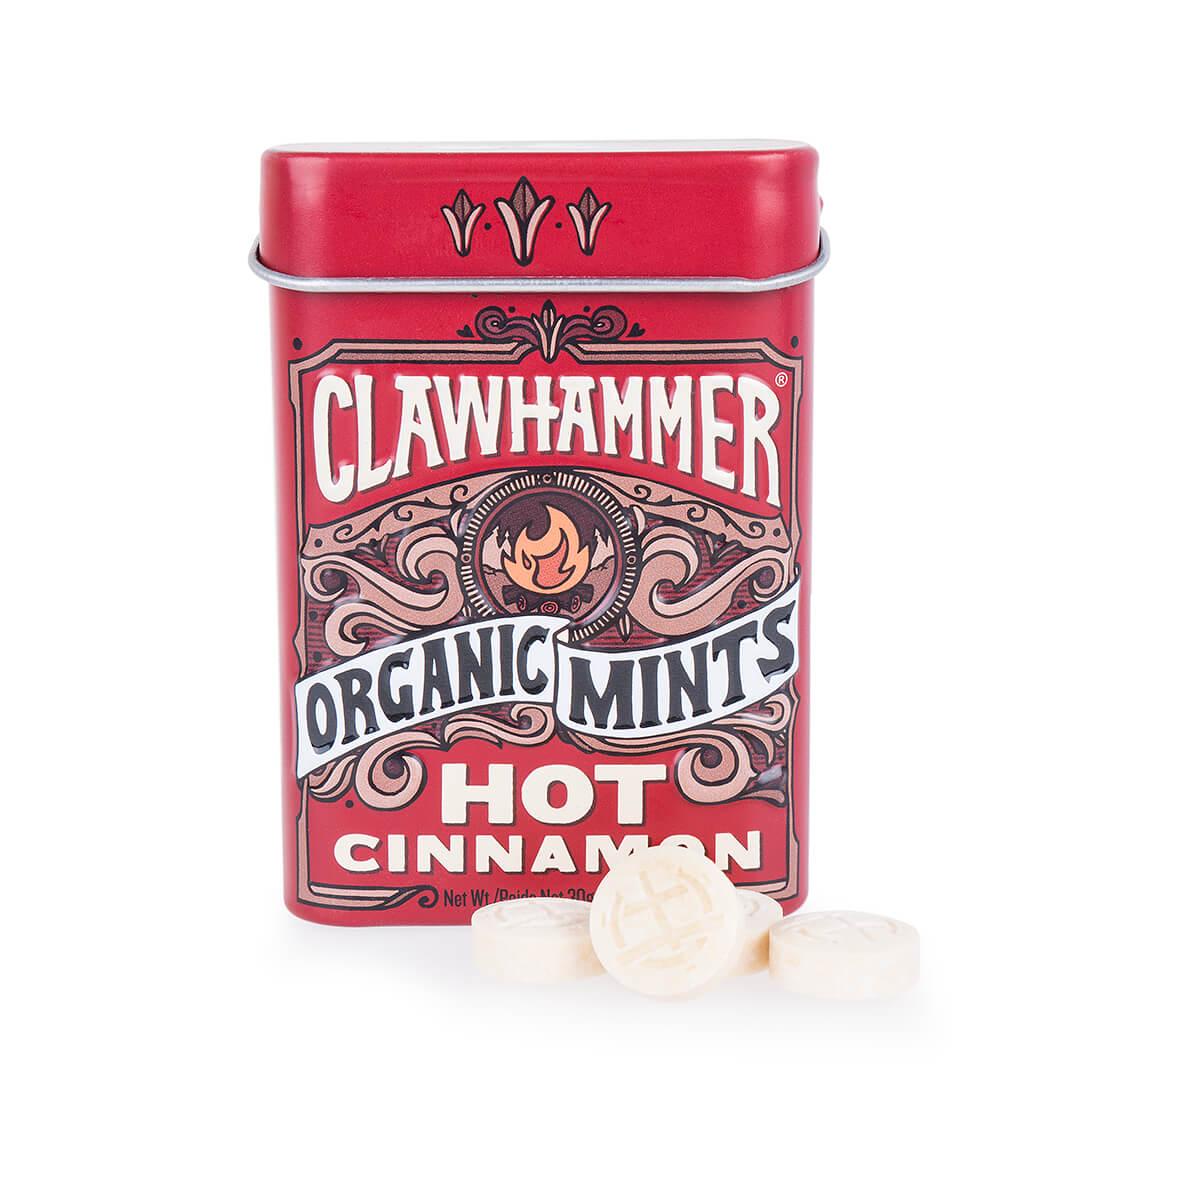  Clawhammer Cinnamon Organic Mints